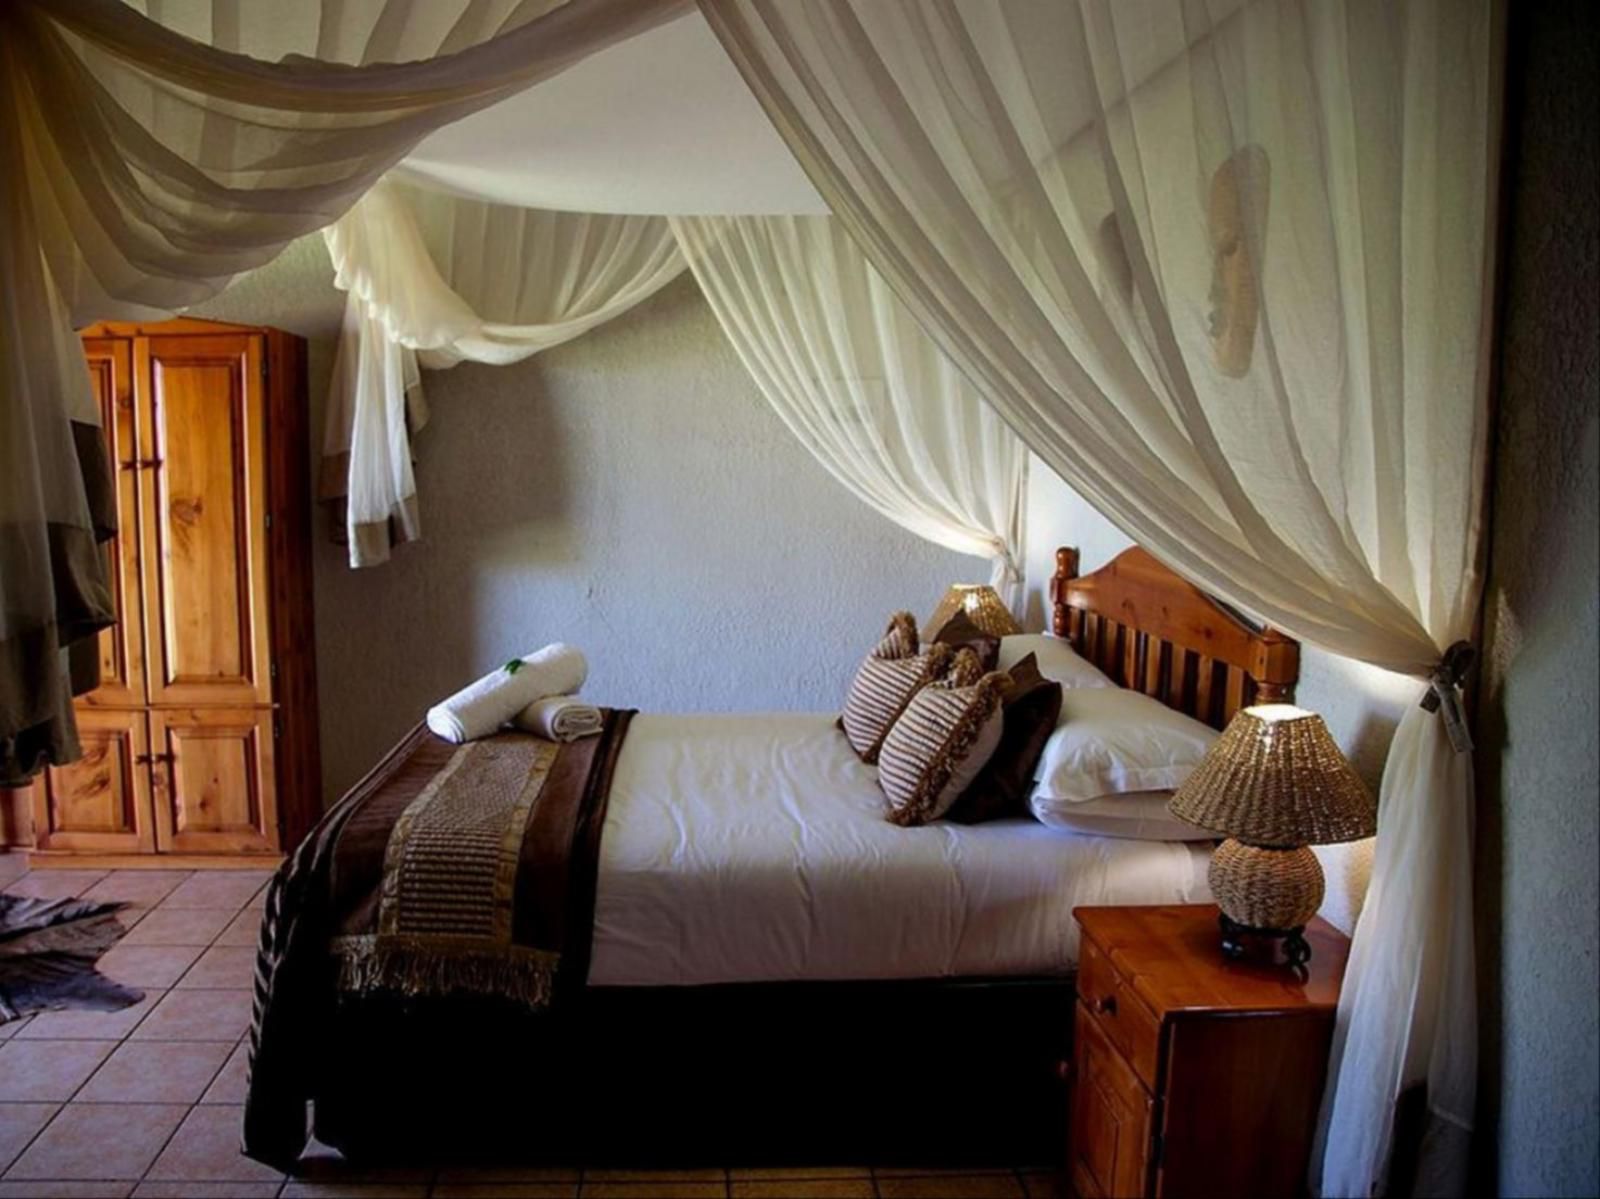 Umqhele Camp Thabazimbi Limpopo Province South Africa Bedroom